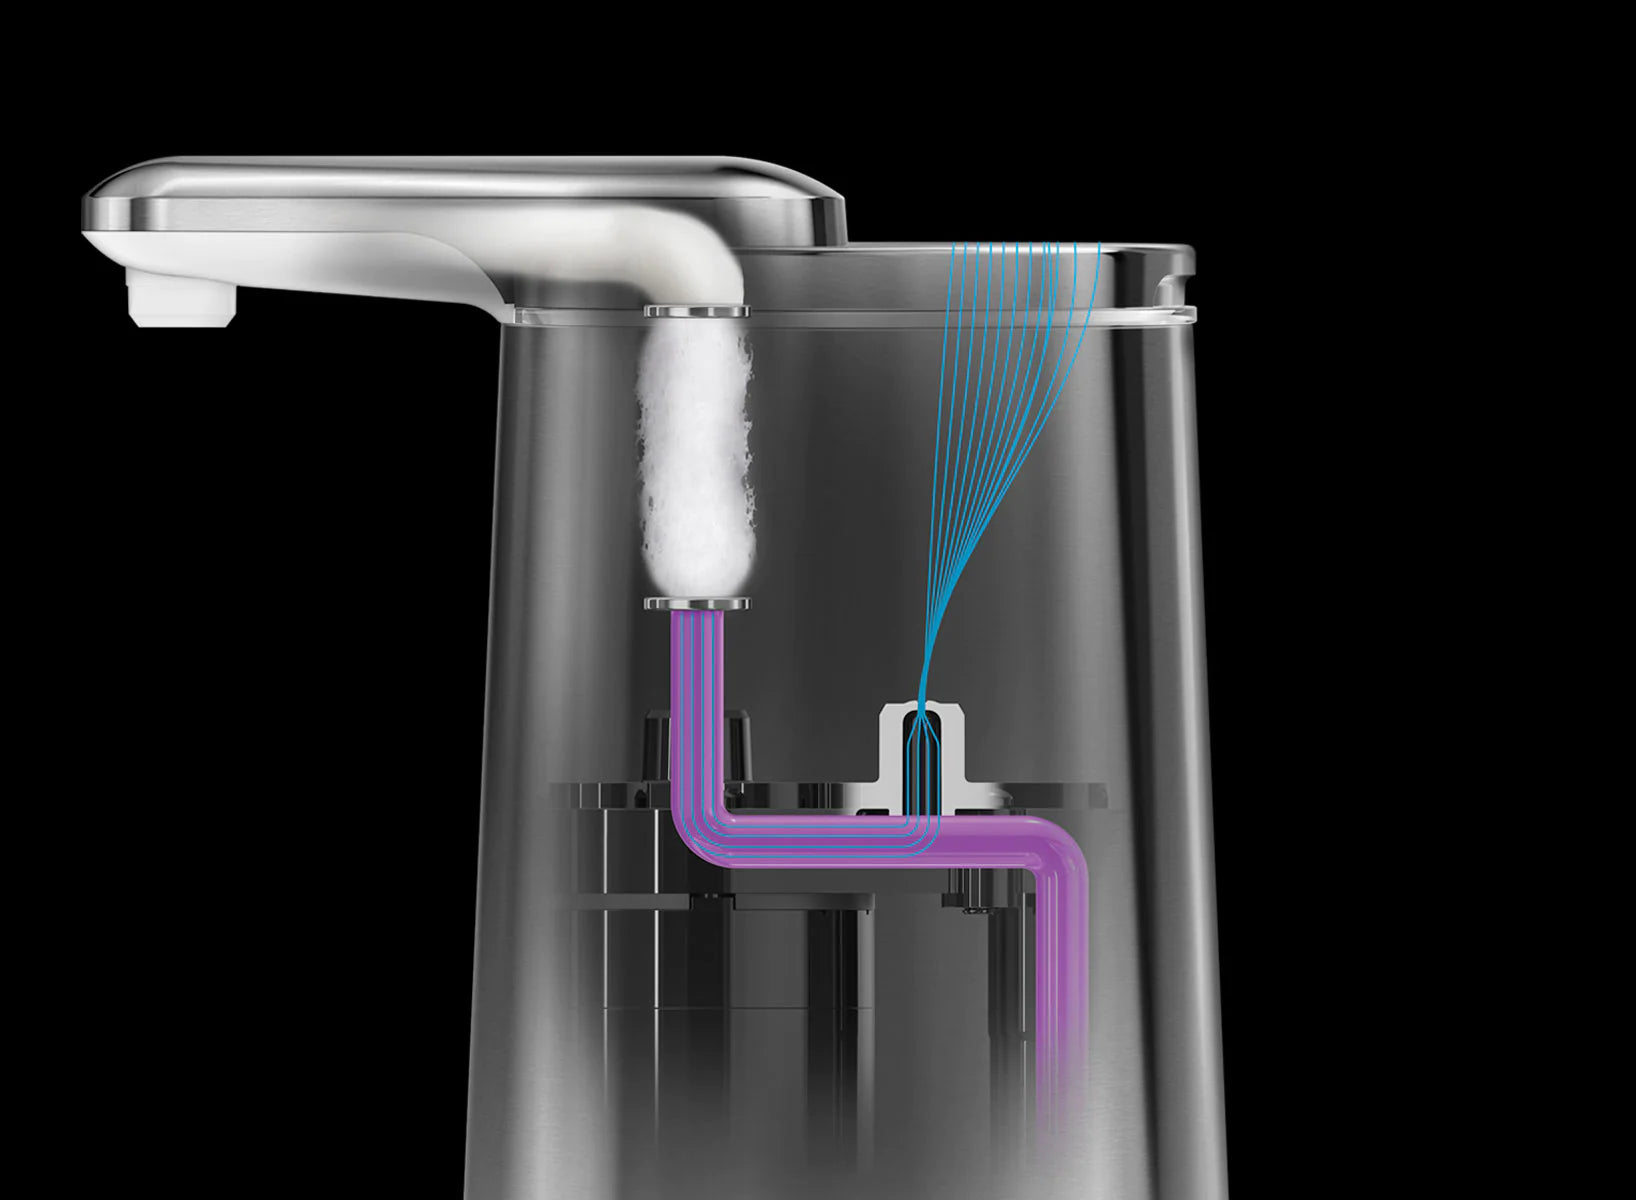 Rechargeable Foam Sensor Pump Soap Dispenser